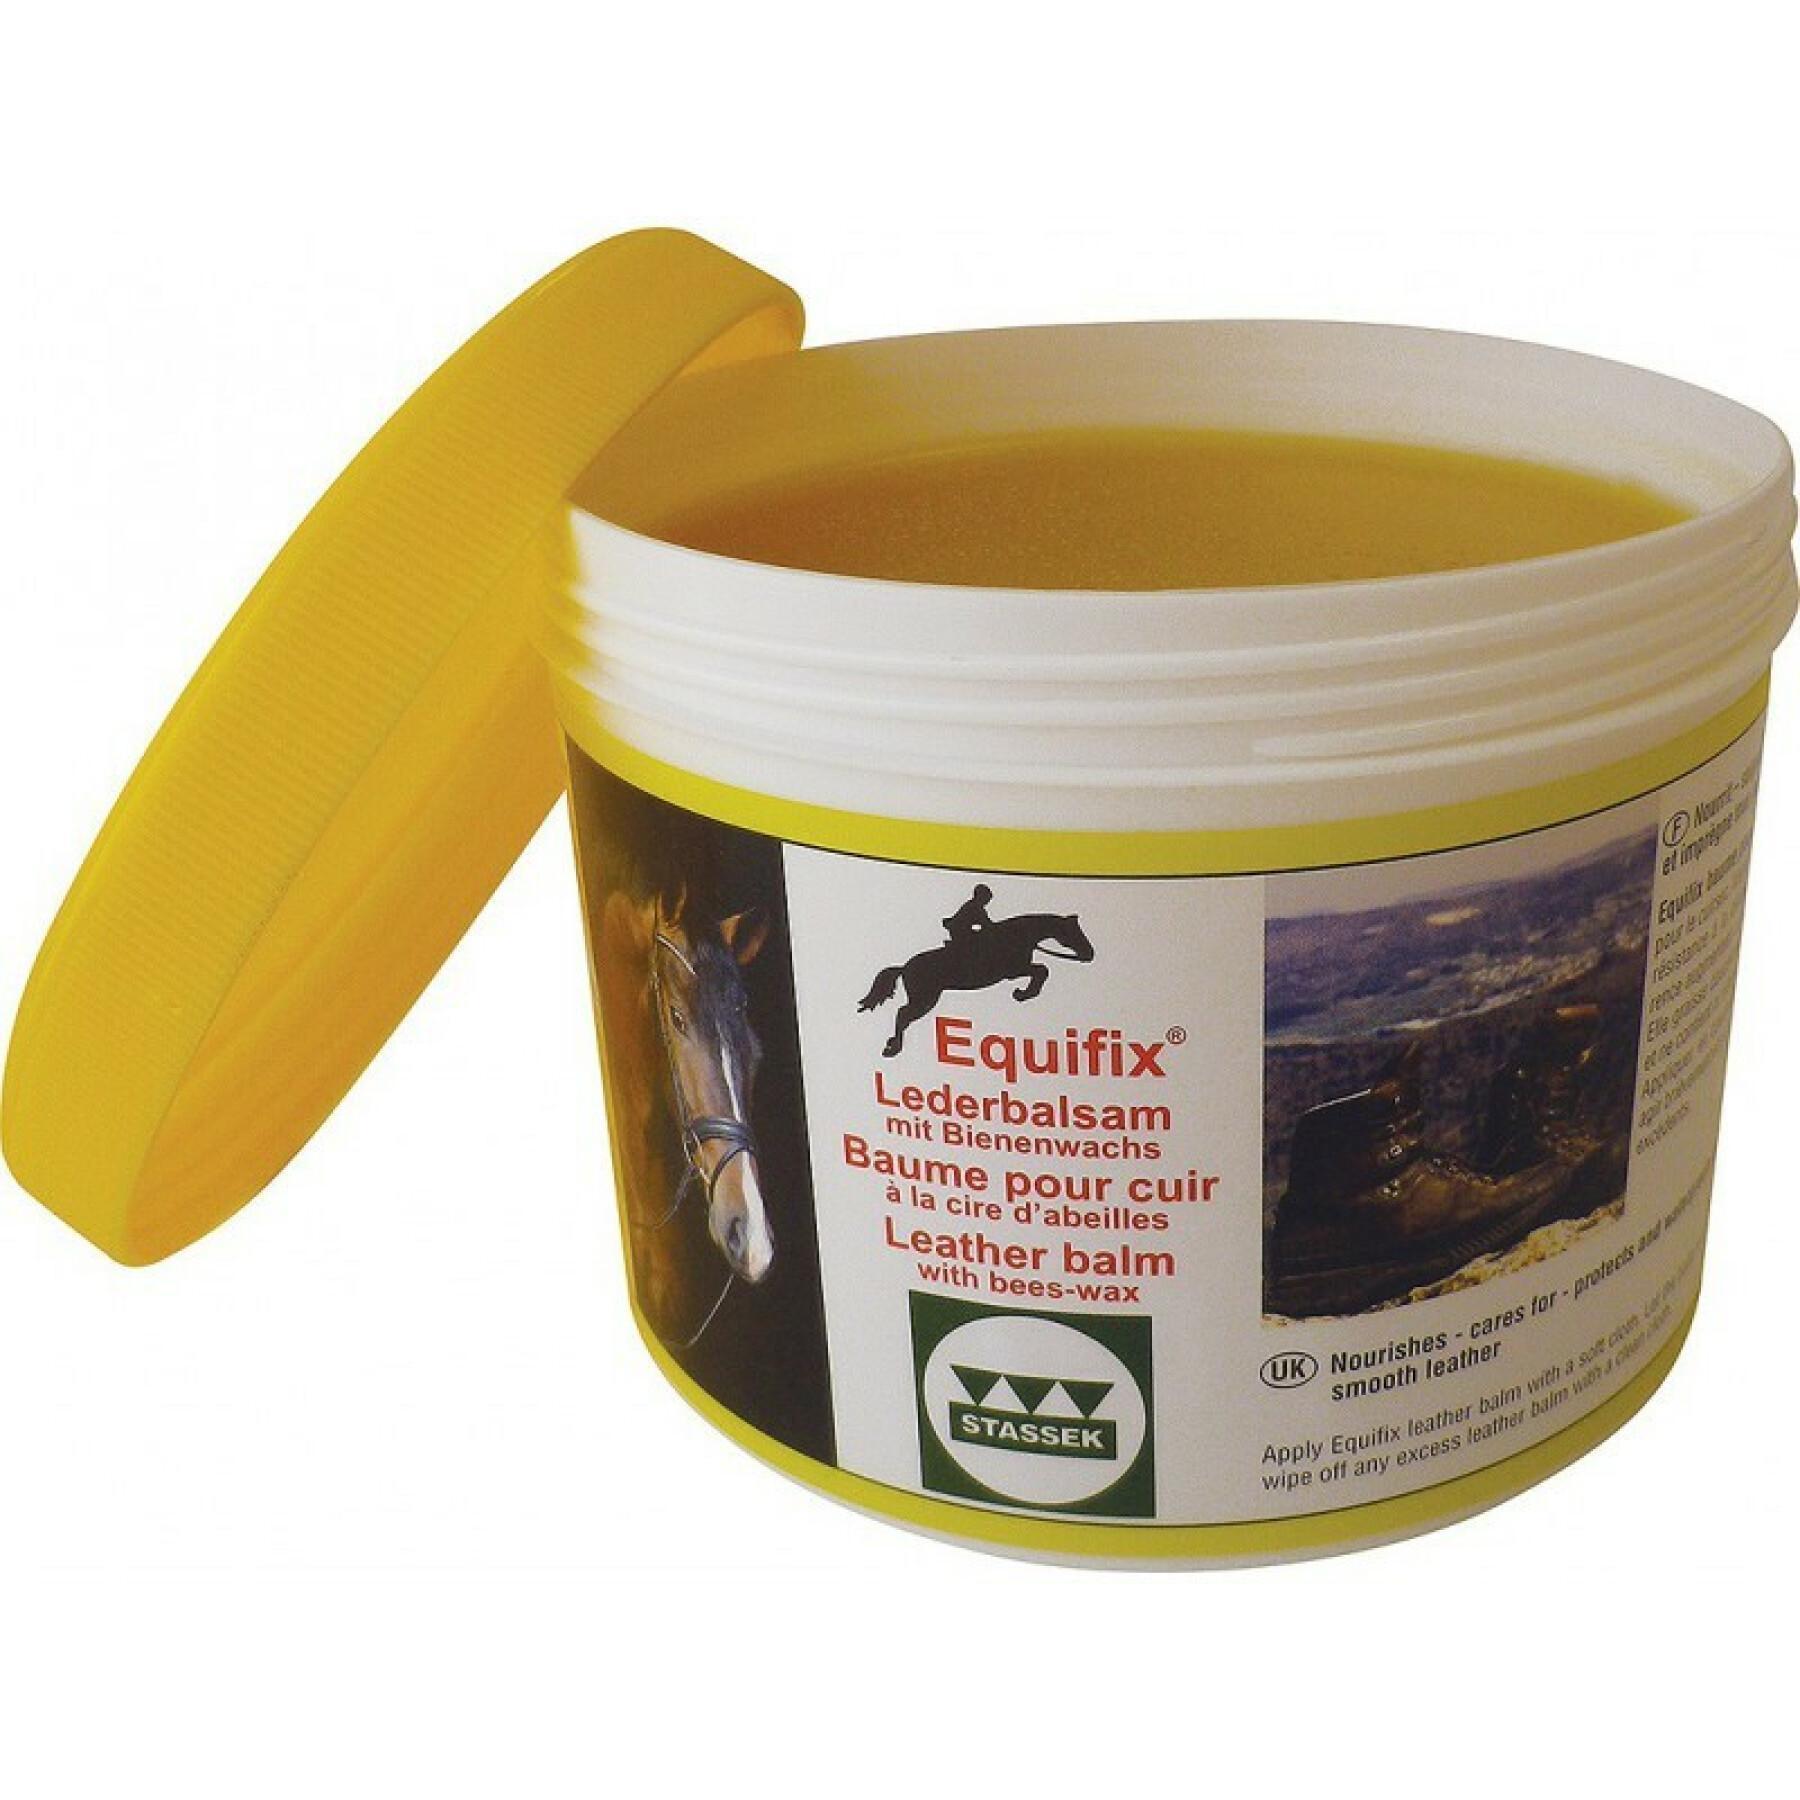 Acquista Stassek Equifix Balsamo per pelle con cera d'api, 500 ml ora